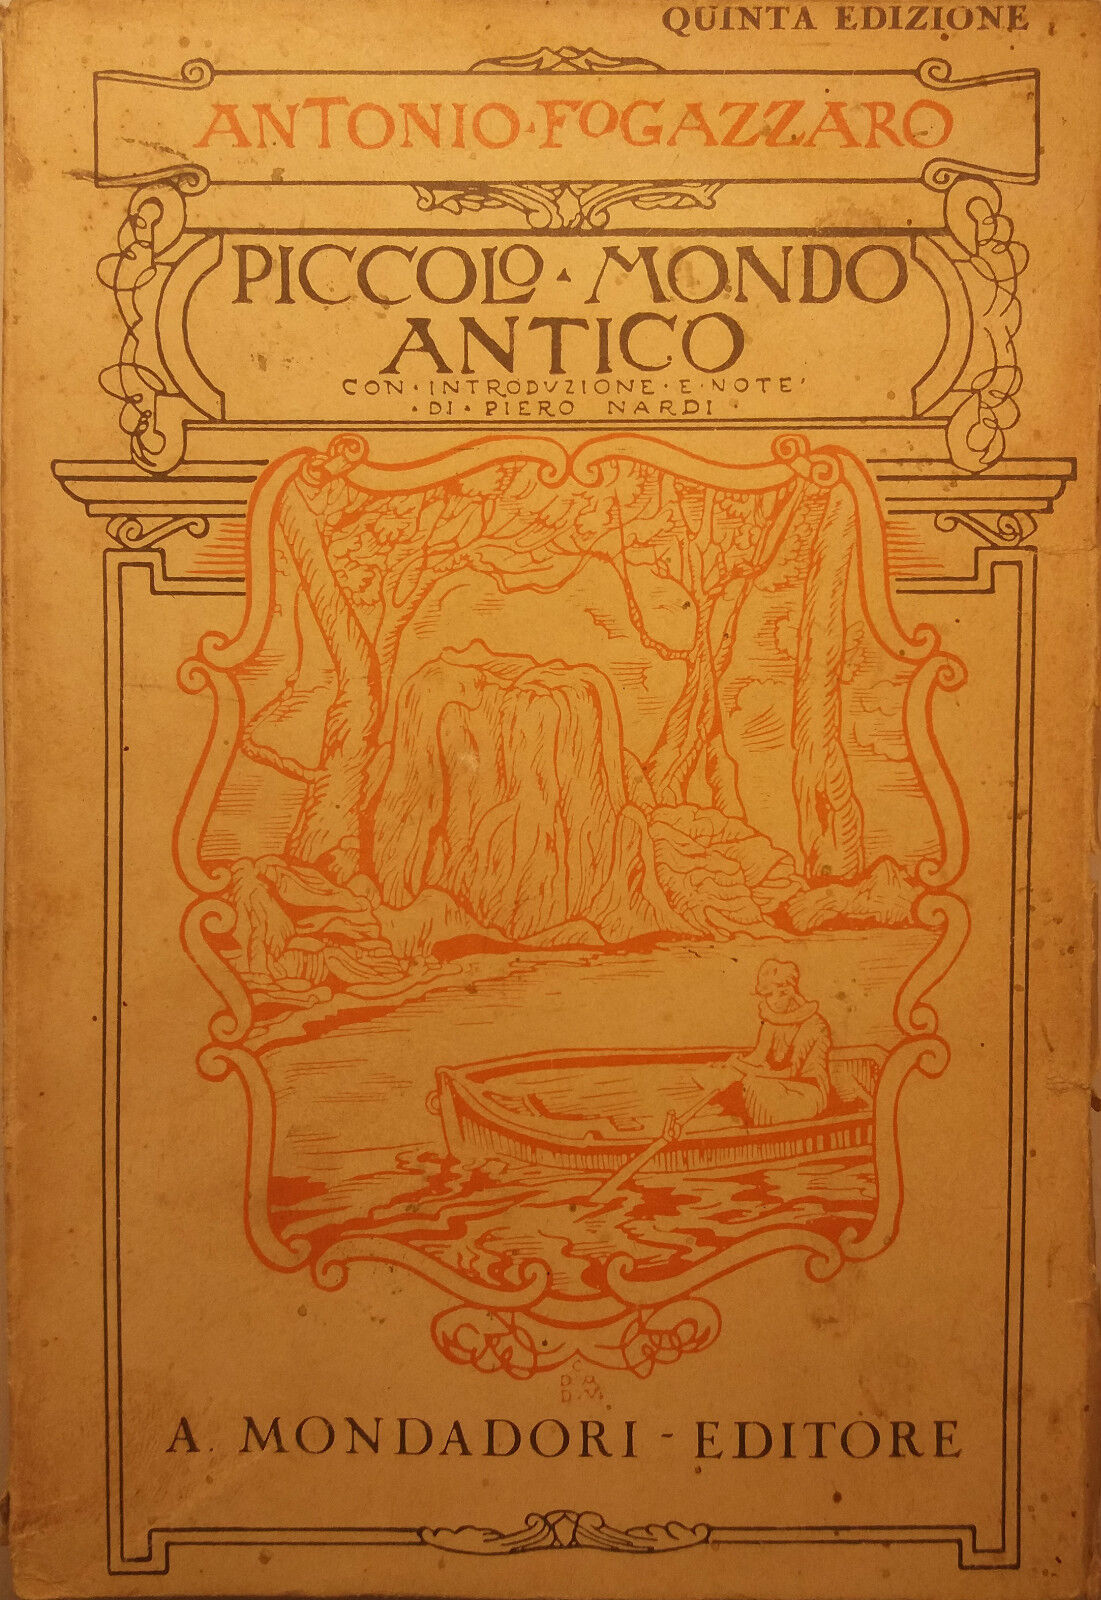 Piccolo mondo antico - Antonio Fogazzaro - A. Mondadori - 1941 - G